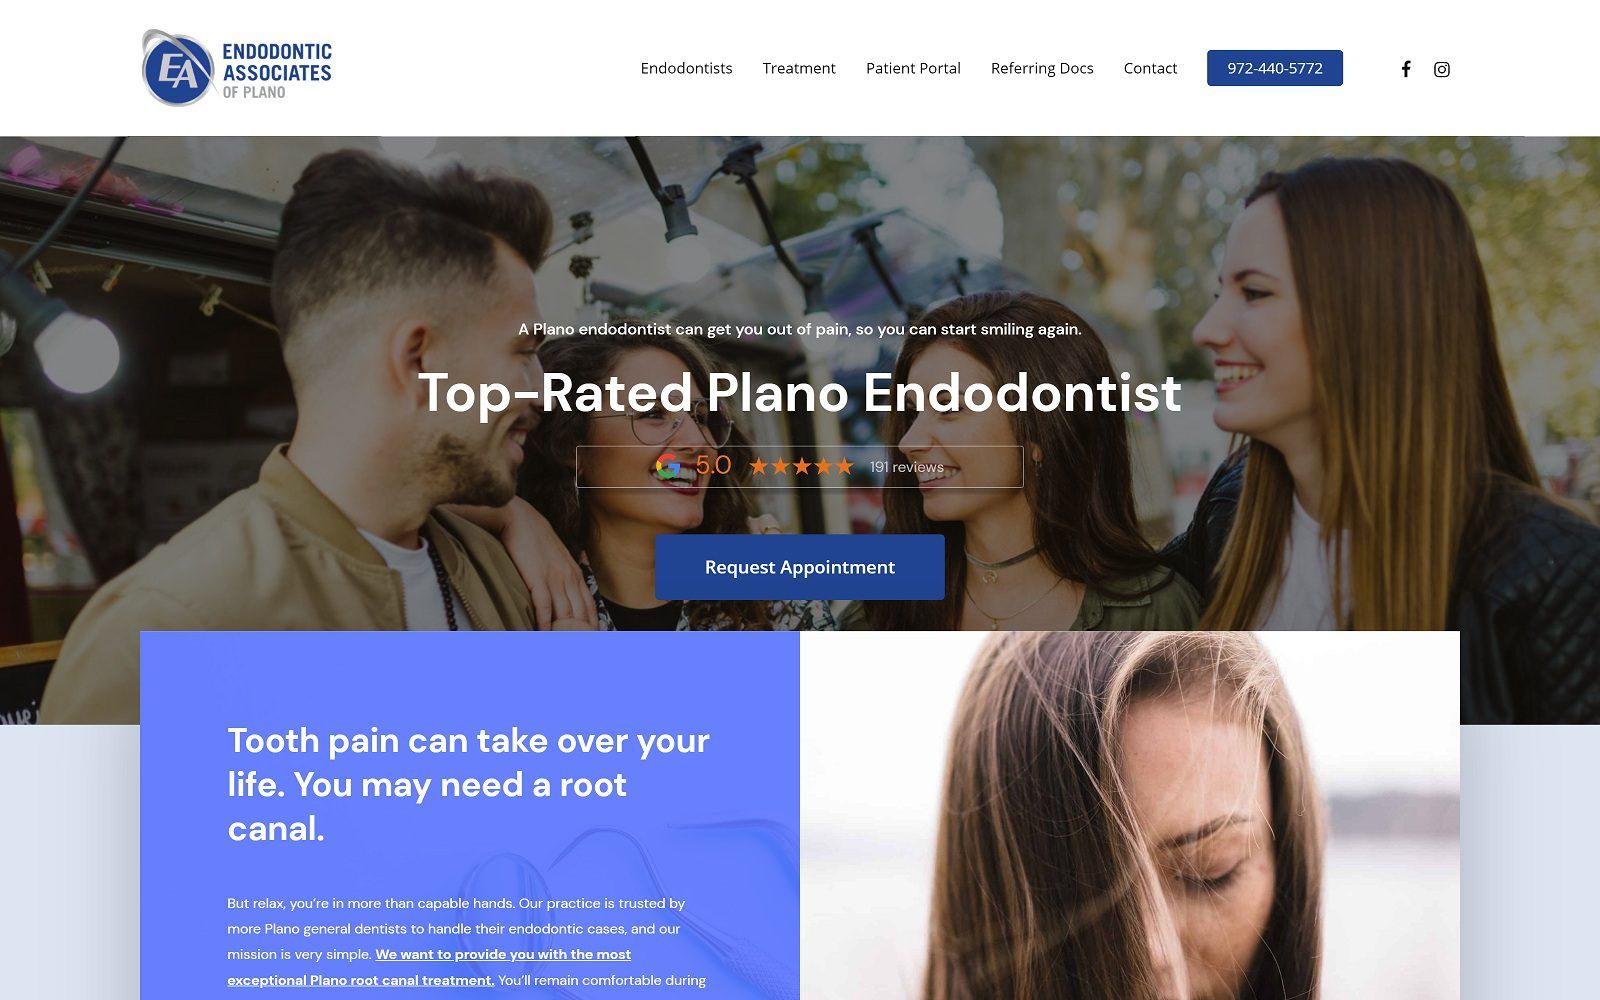 The screenshot of endodontic associates of plano website